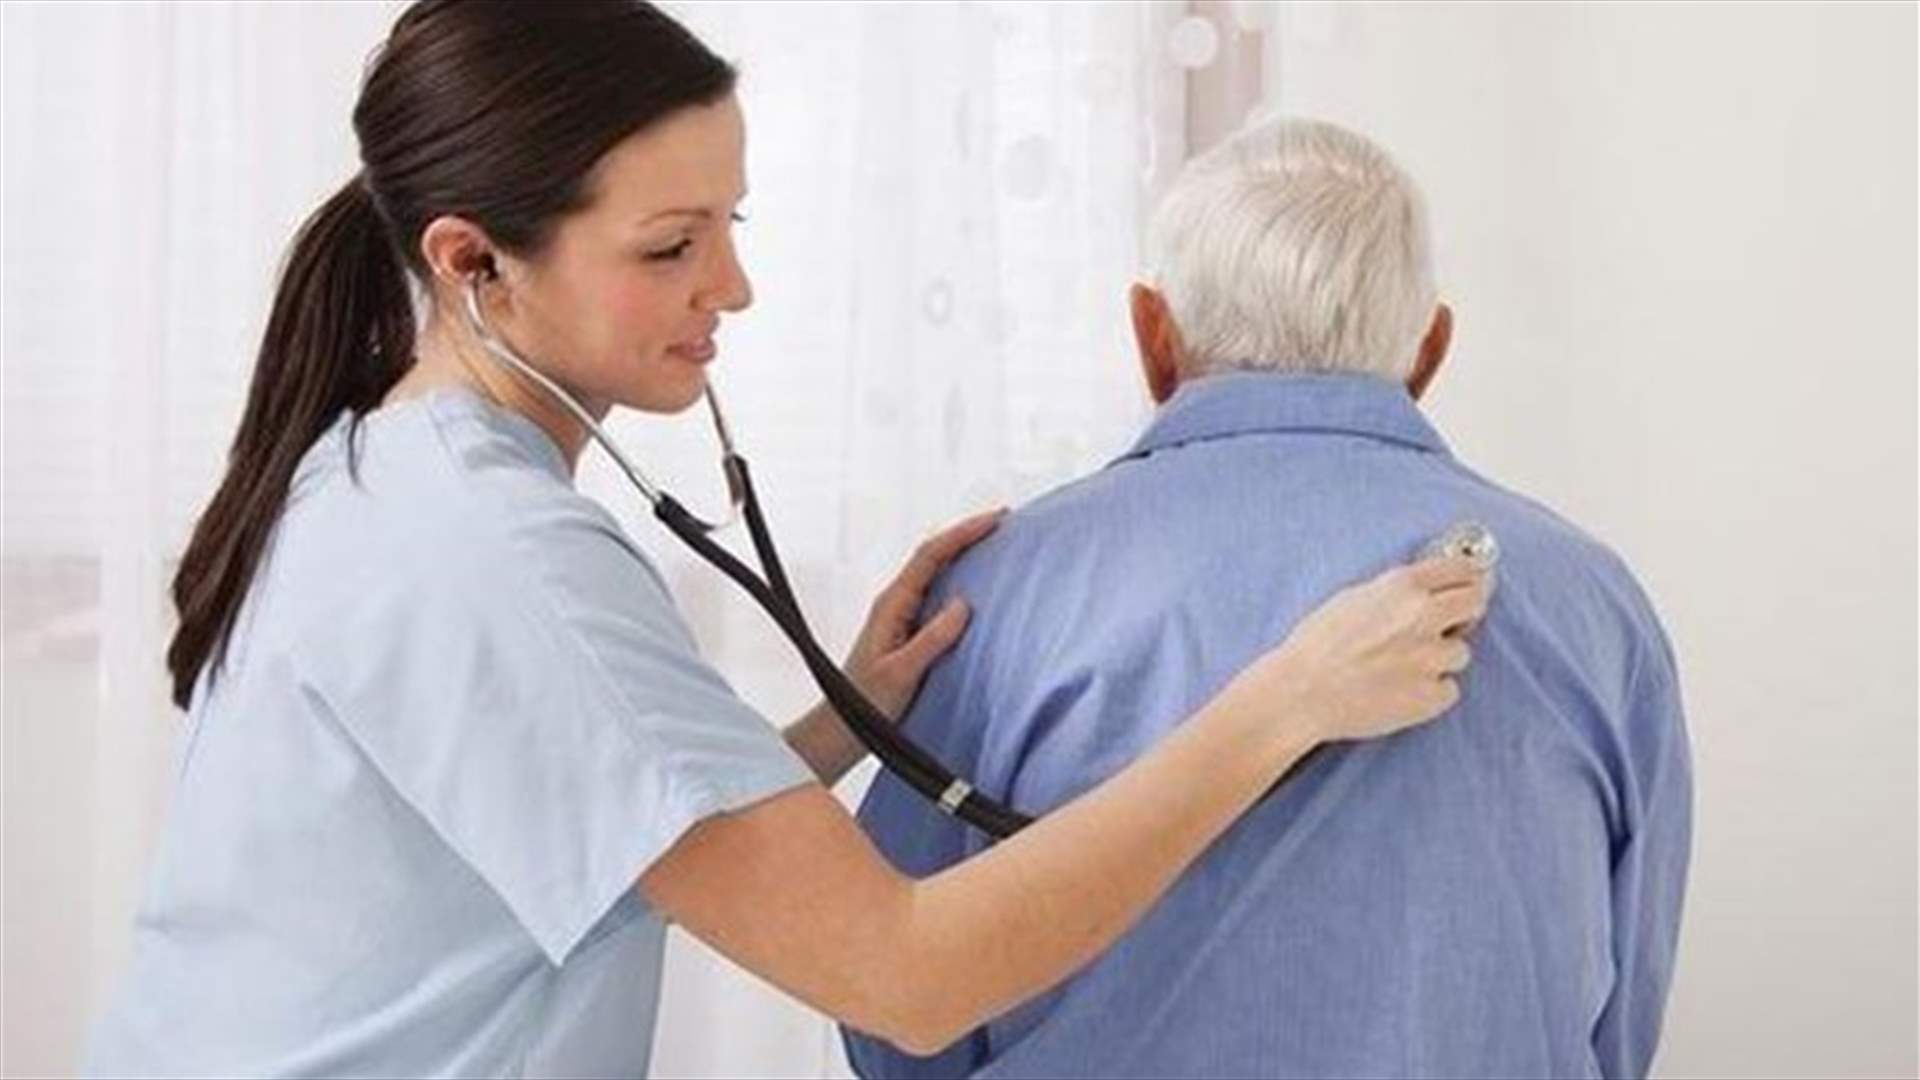 Elderly Face Increased Disability Risk After Emergency Room Visit